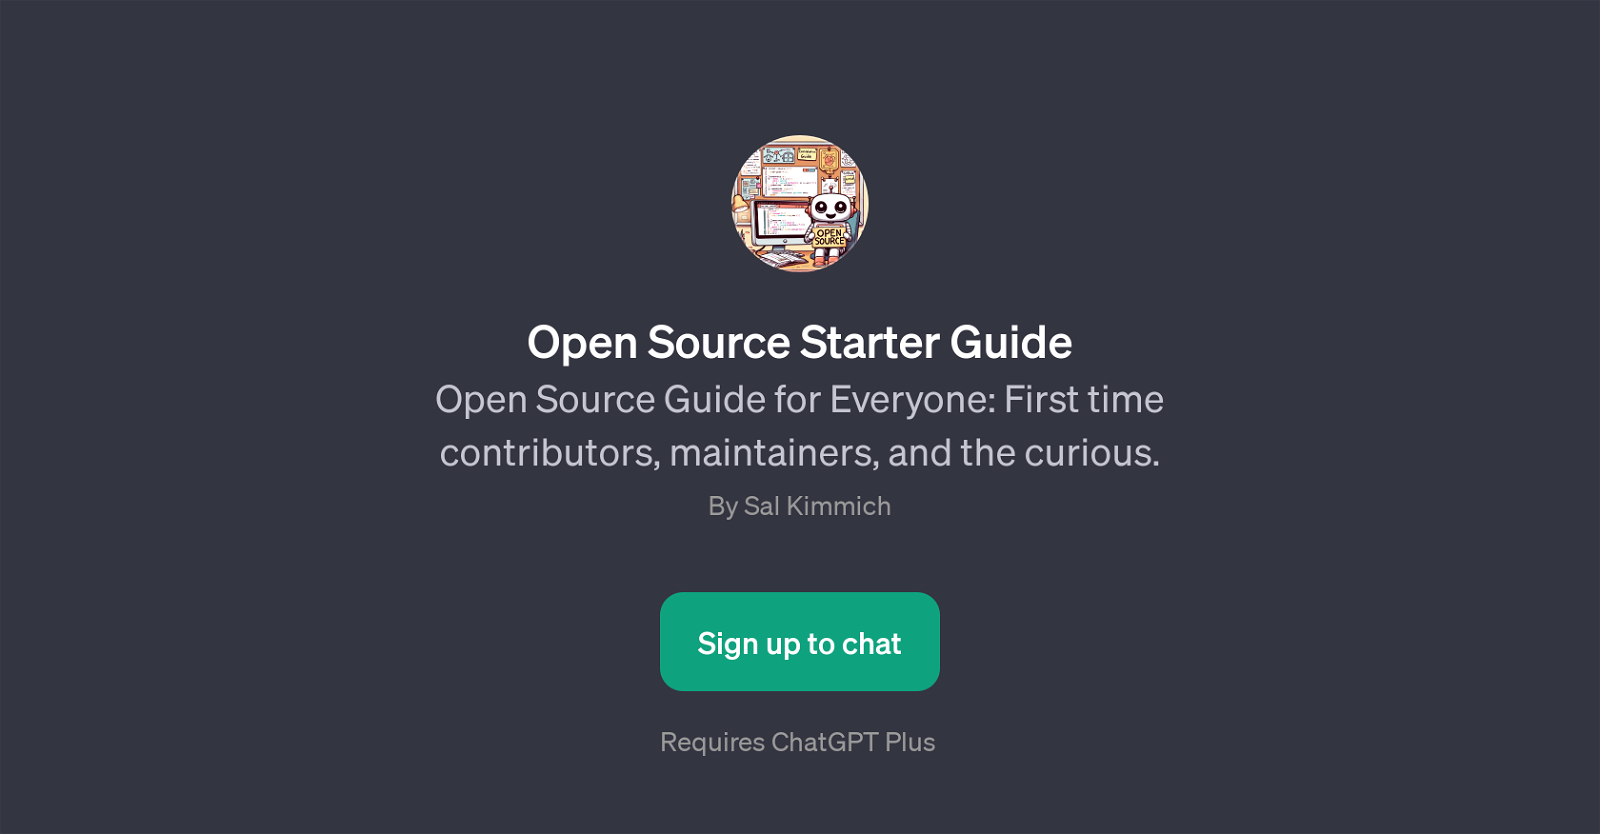 Open Source Starter Guide website